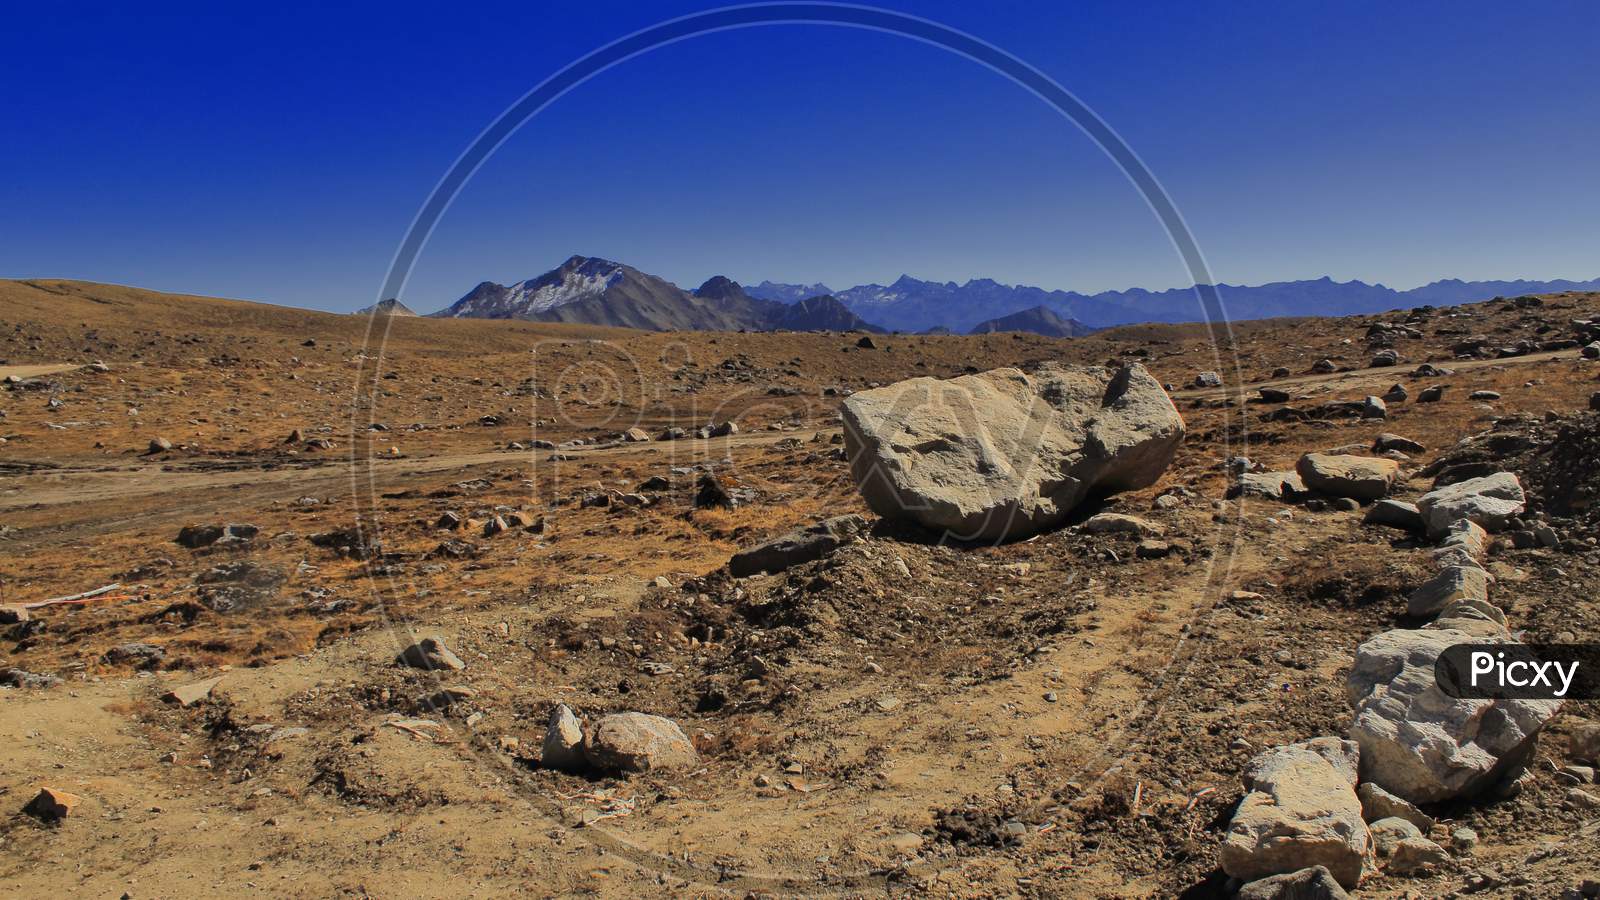 mountain desert like rocky barren landscape at bum la pass